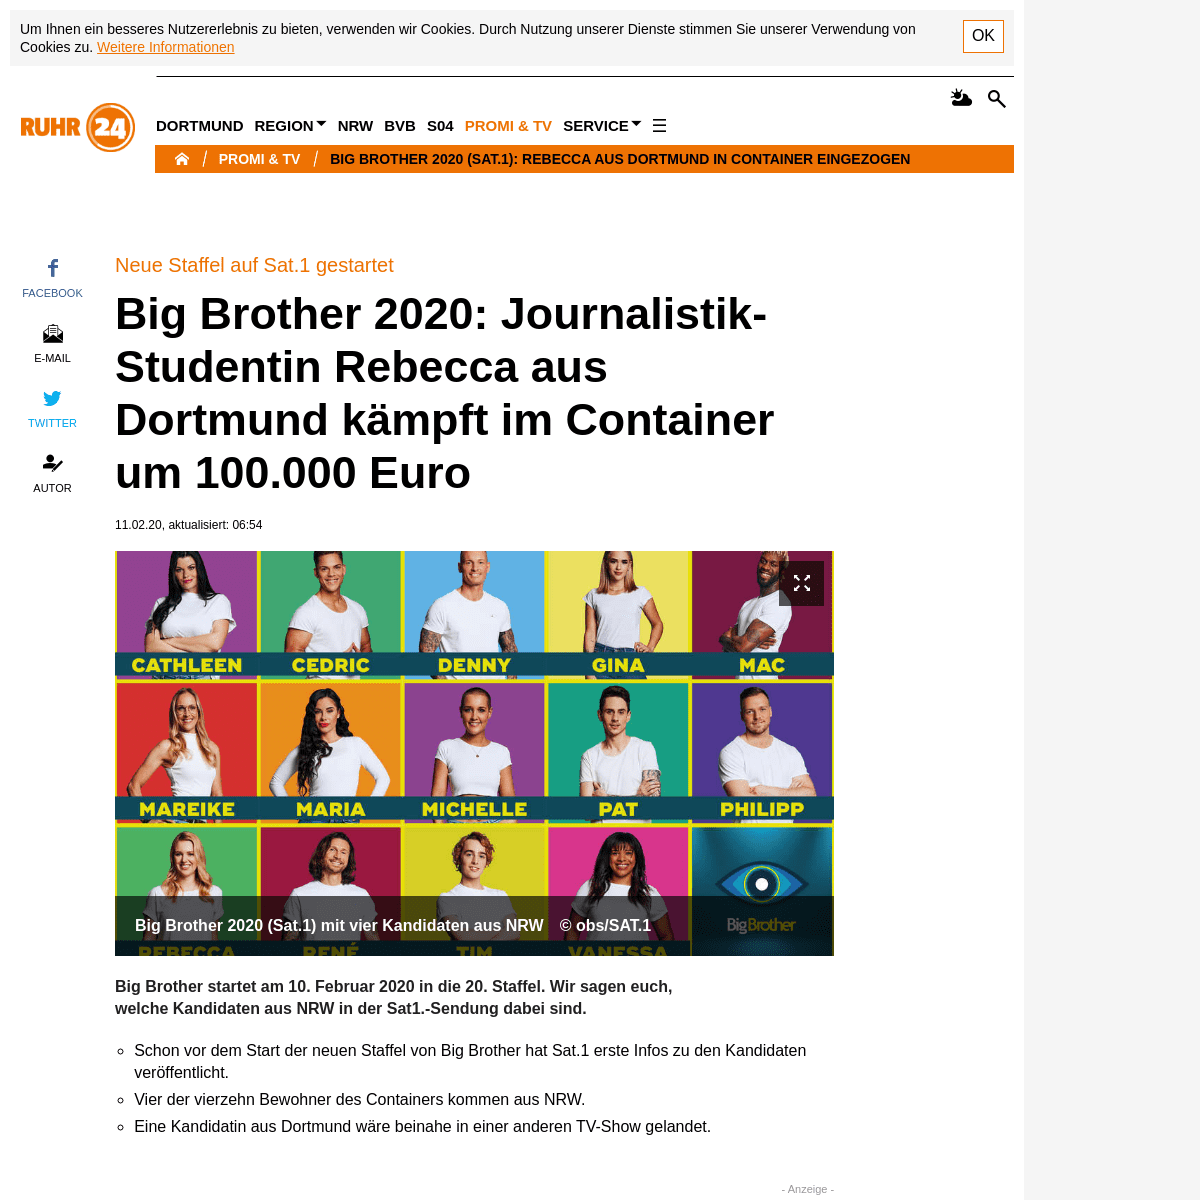 A complete backup of www.ruhr24.de/promi-tv/big-brother-2020-sat1-kandidaten-beginn-nrw-13526196.html